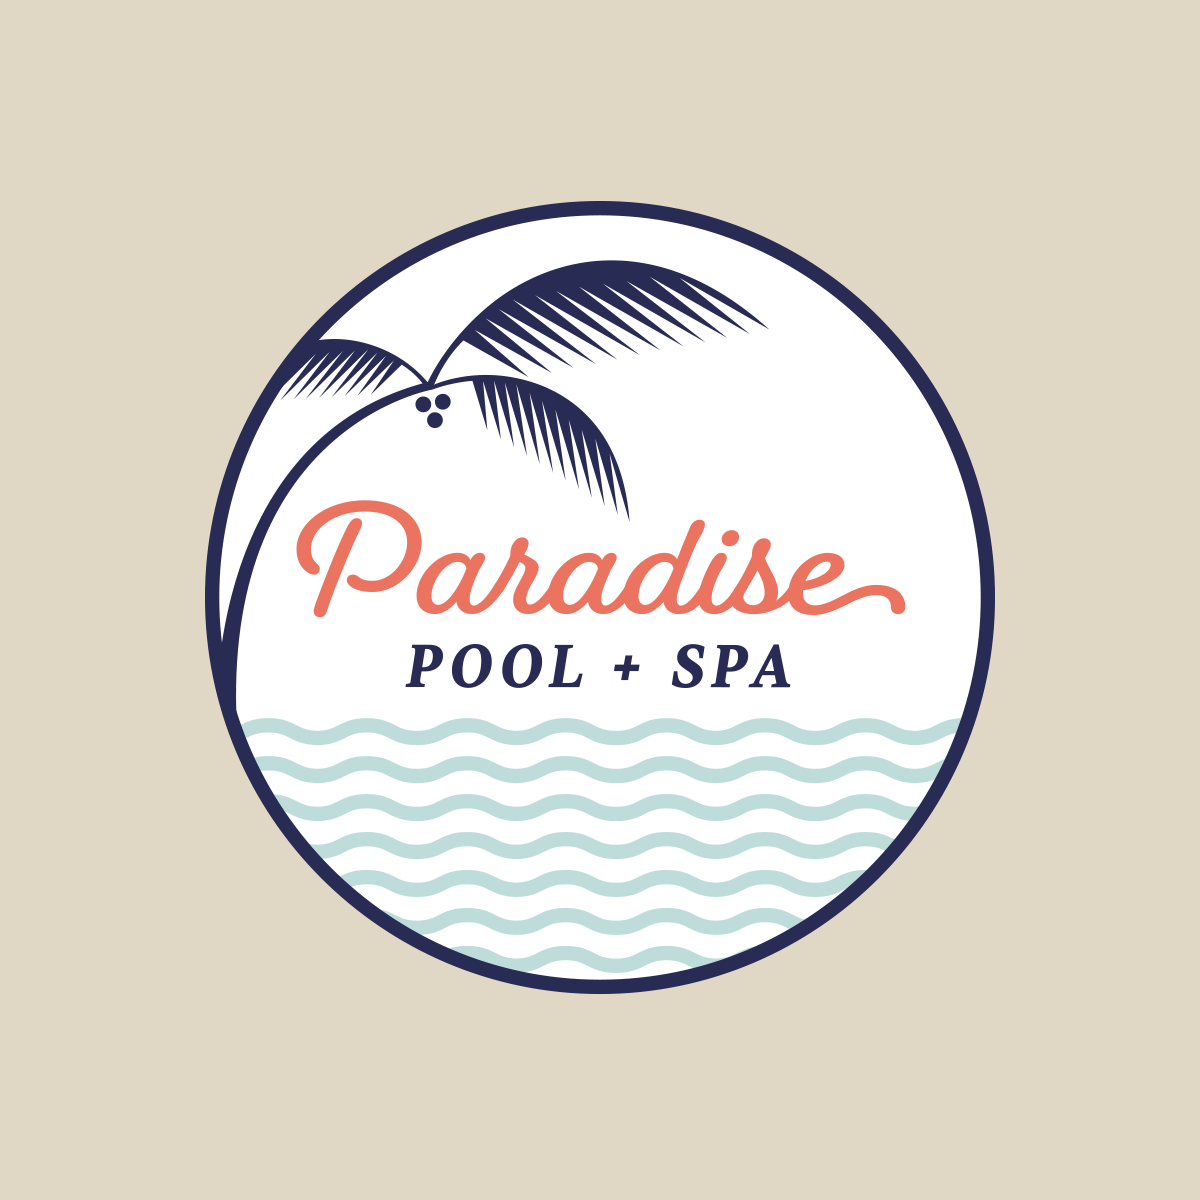 Paradise Pool & Spa in Trail BC logo design & branding